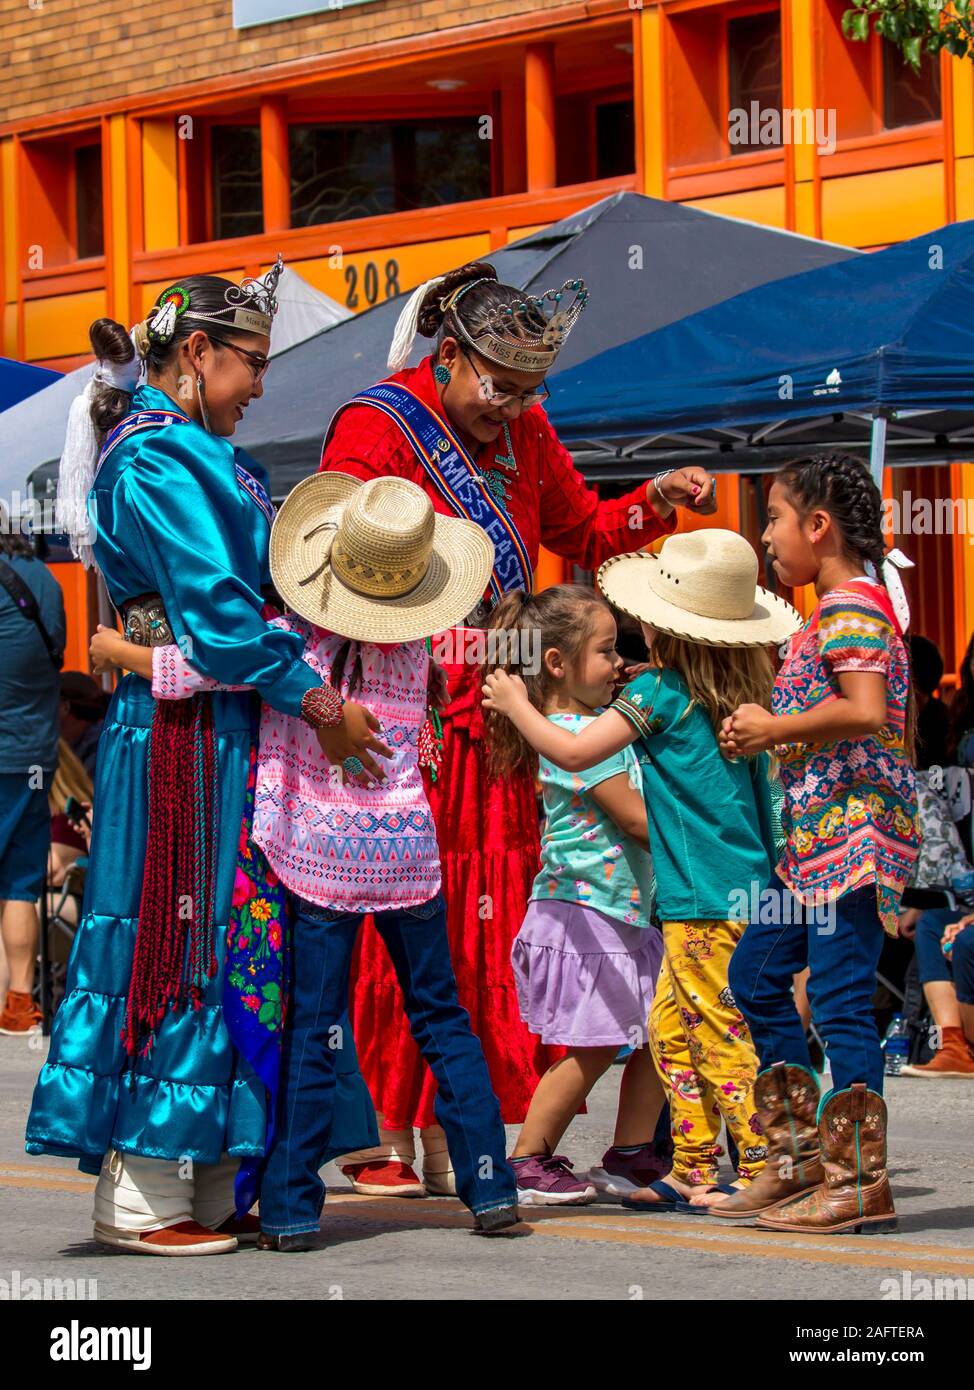 AUGUST 10, 2019 - Gallup, New Mexico, USA - Porträts der gebürtigen Amerikaner & Navajo mit childrenat 98th Gallup Inter-tribal Indian Ceremonial, New Mexico Stockfoto